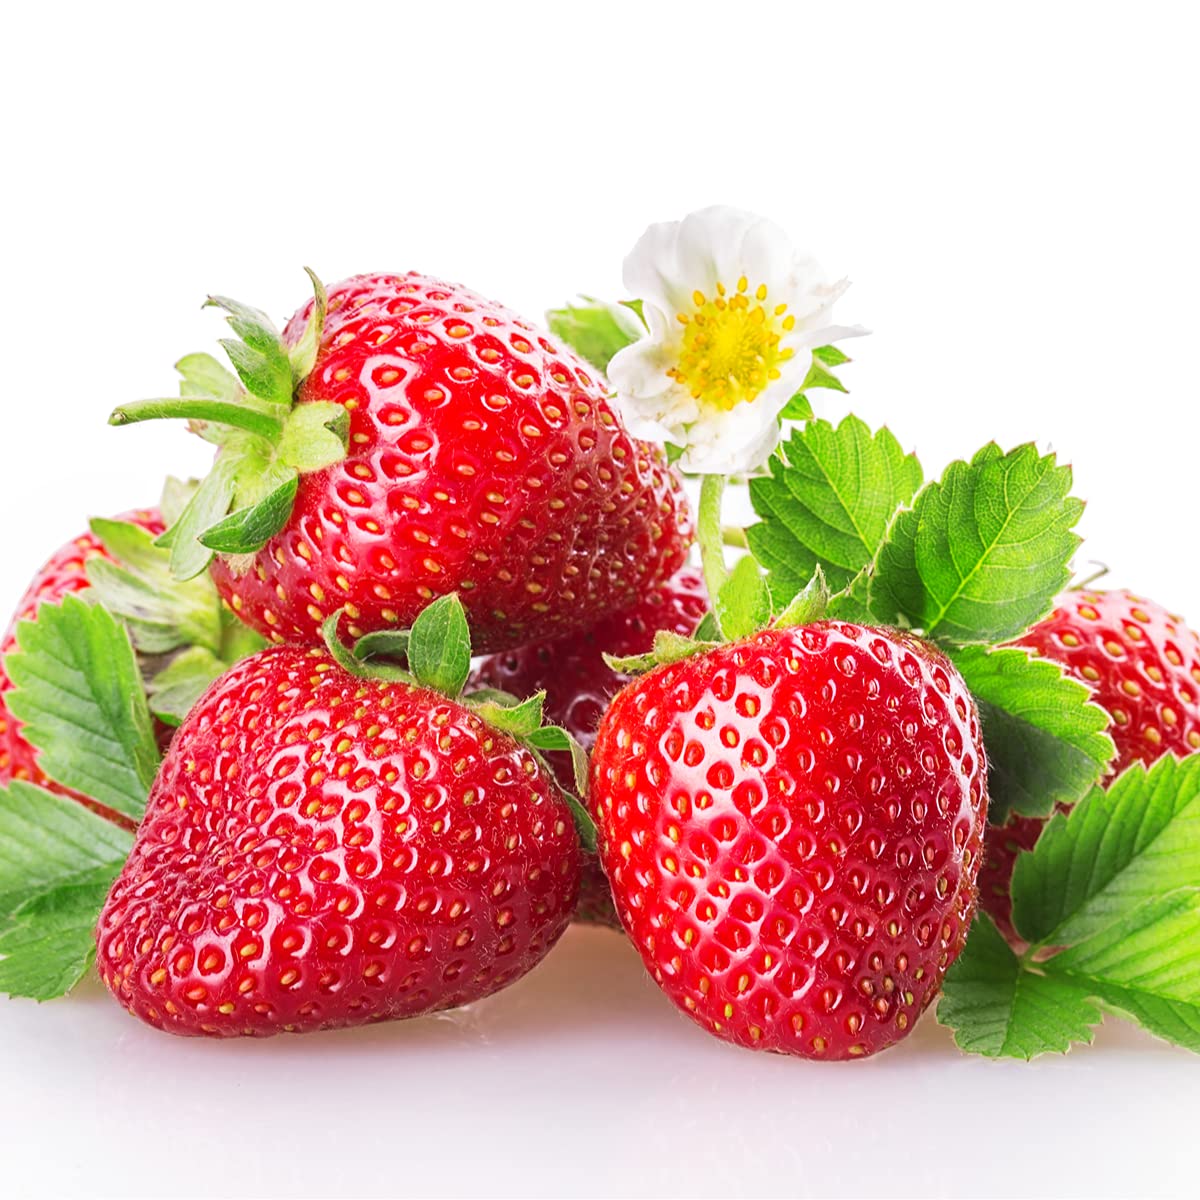 Strawberry Plants - 'Malling Centenary' - 6 x Full Plants in 9cm Pots - AcquaGarden